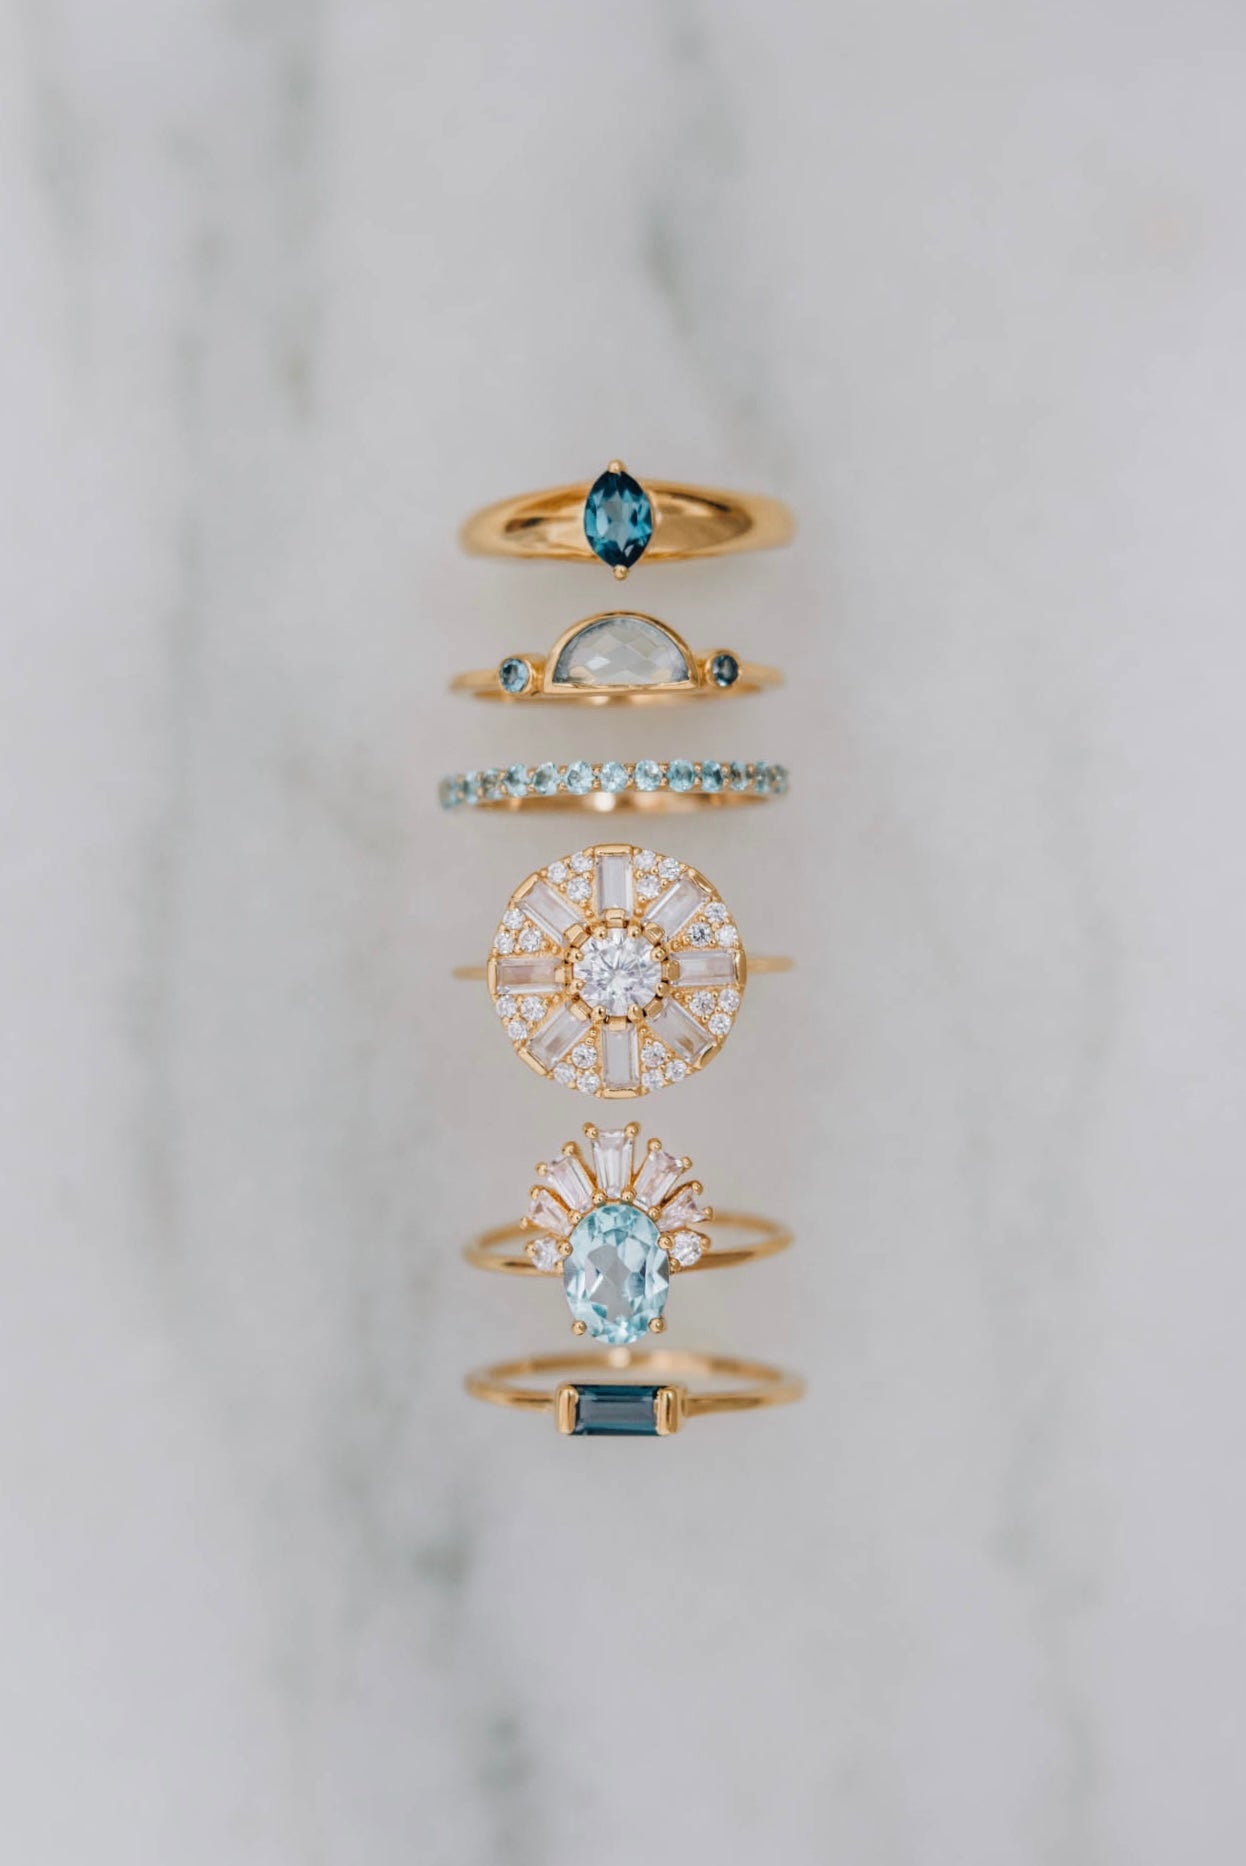 Topaz Blue ring, Something blue ring, wedding ring